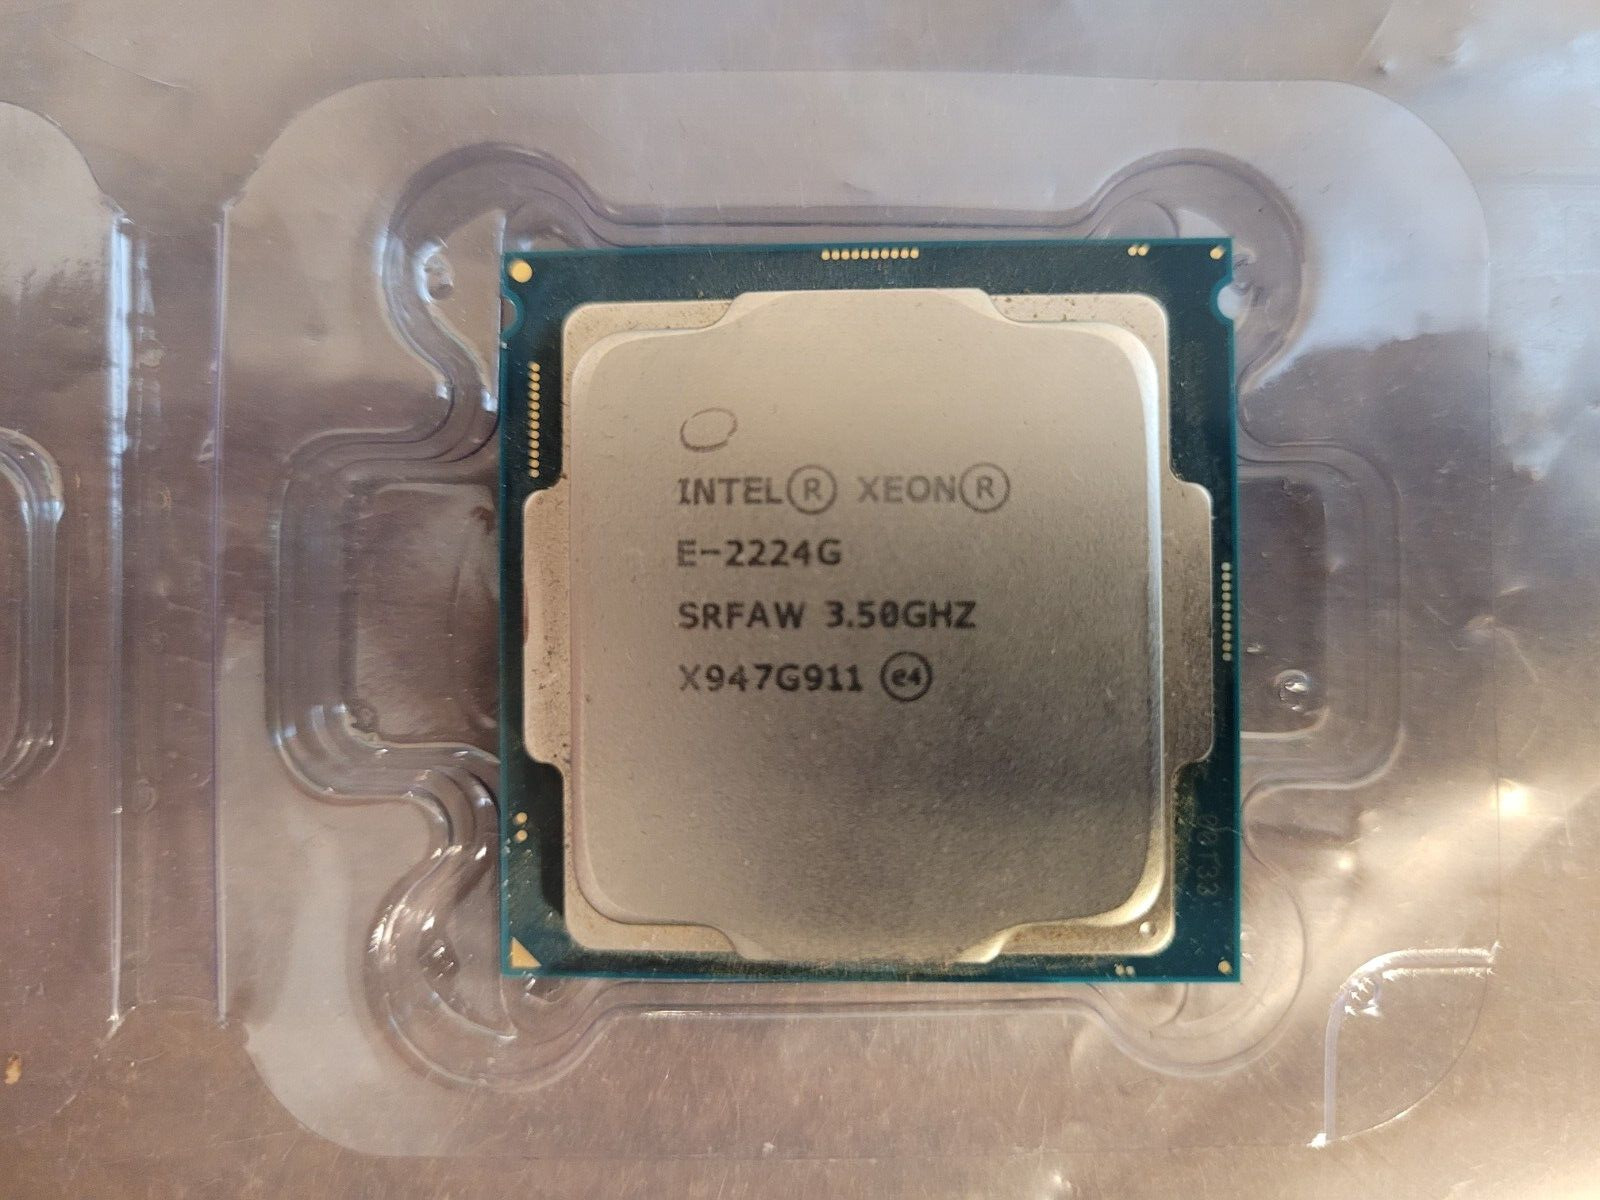 Intel Xeon E-2224G 3.5Ghz 4C/4T 8MB 71W 8GT/s LGA1151 Processor CPU SRFAW